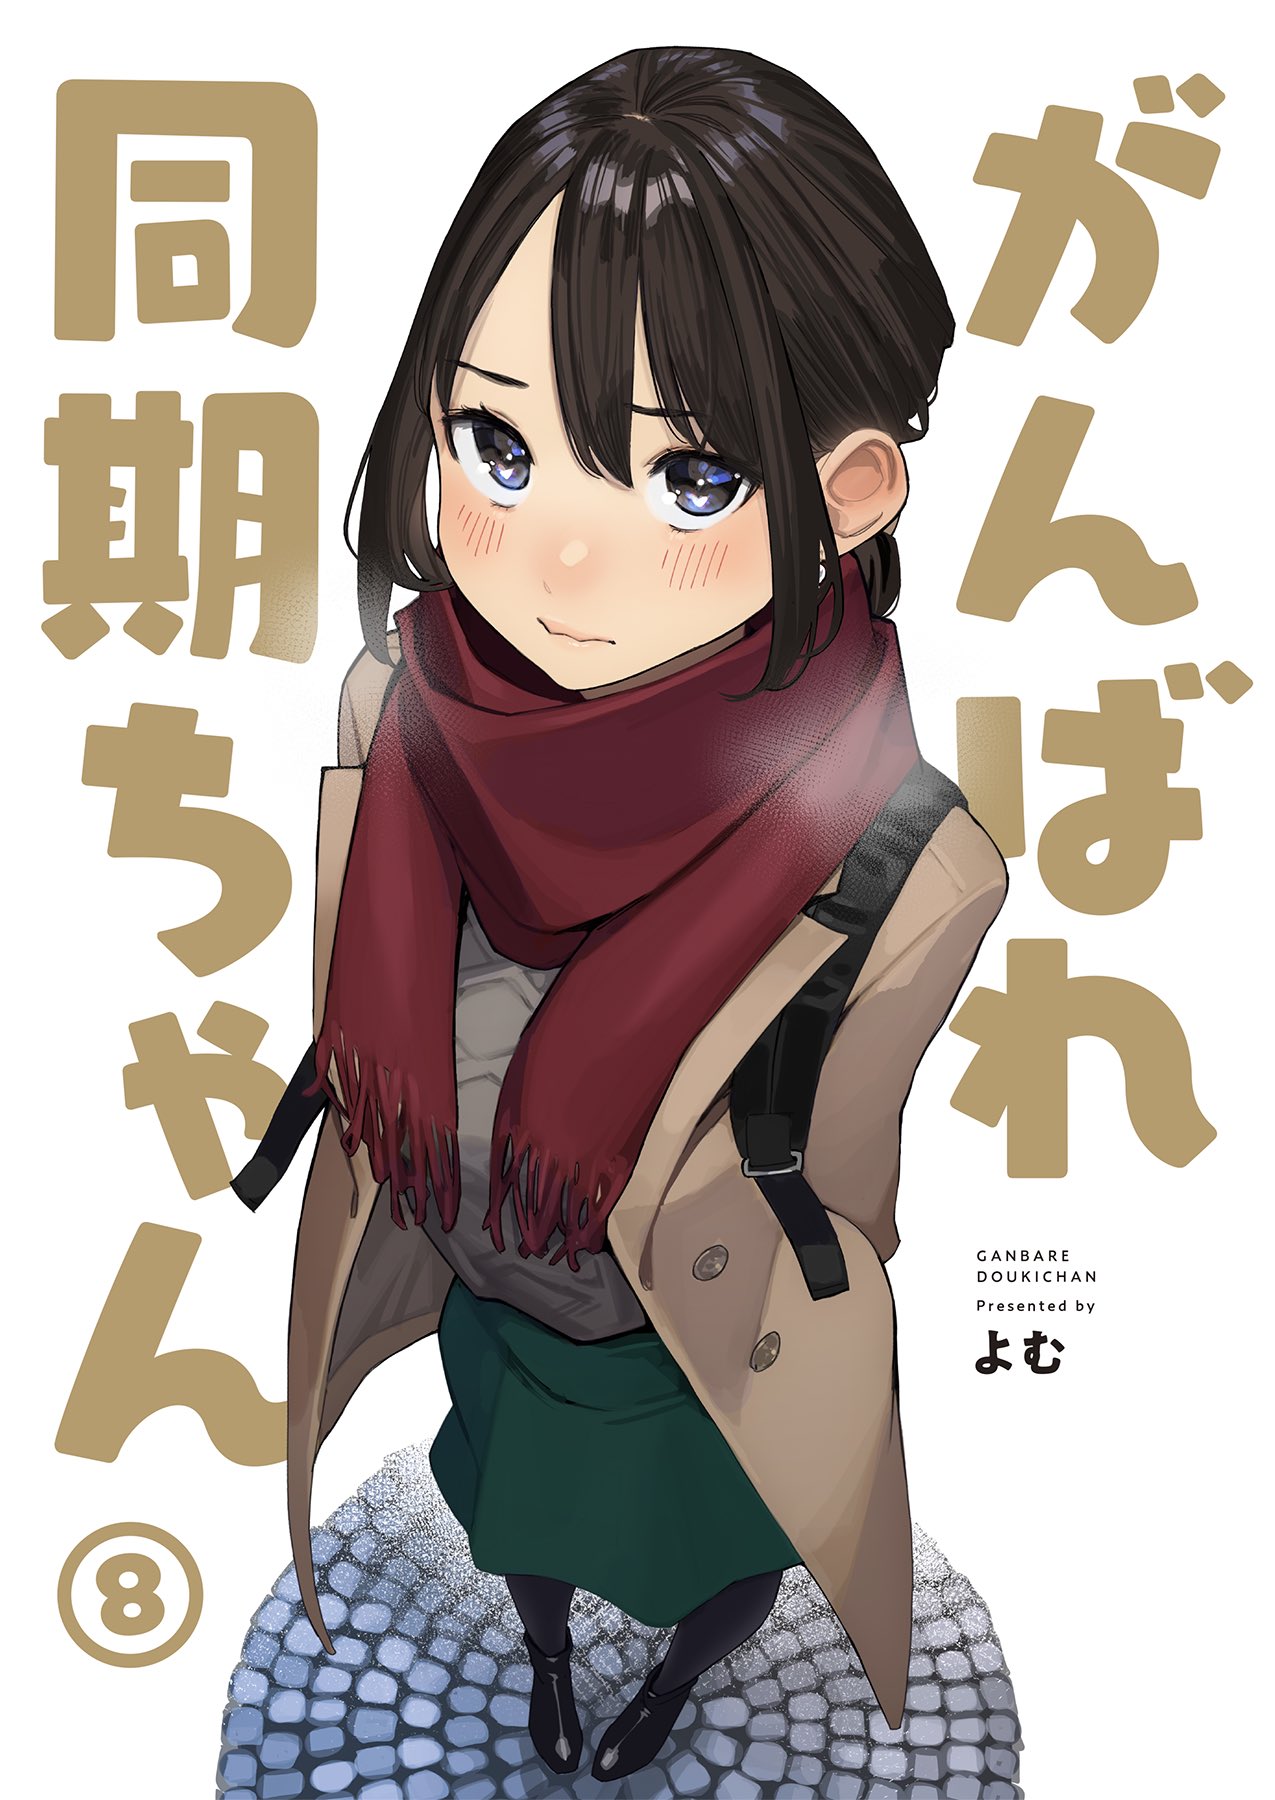 Yom Tights Author's Ganbare Douki-chan Gets Anime Adaptation